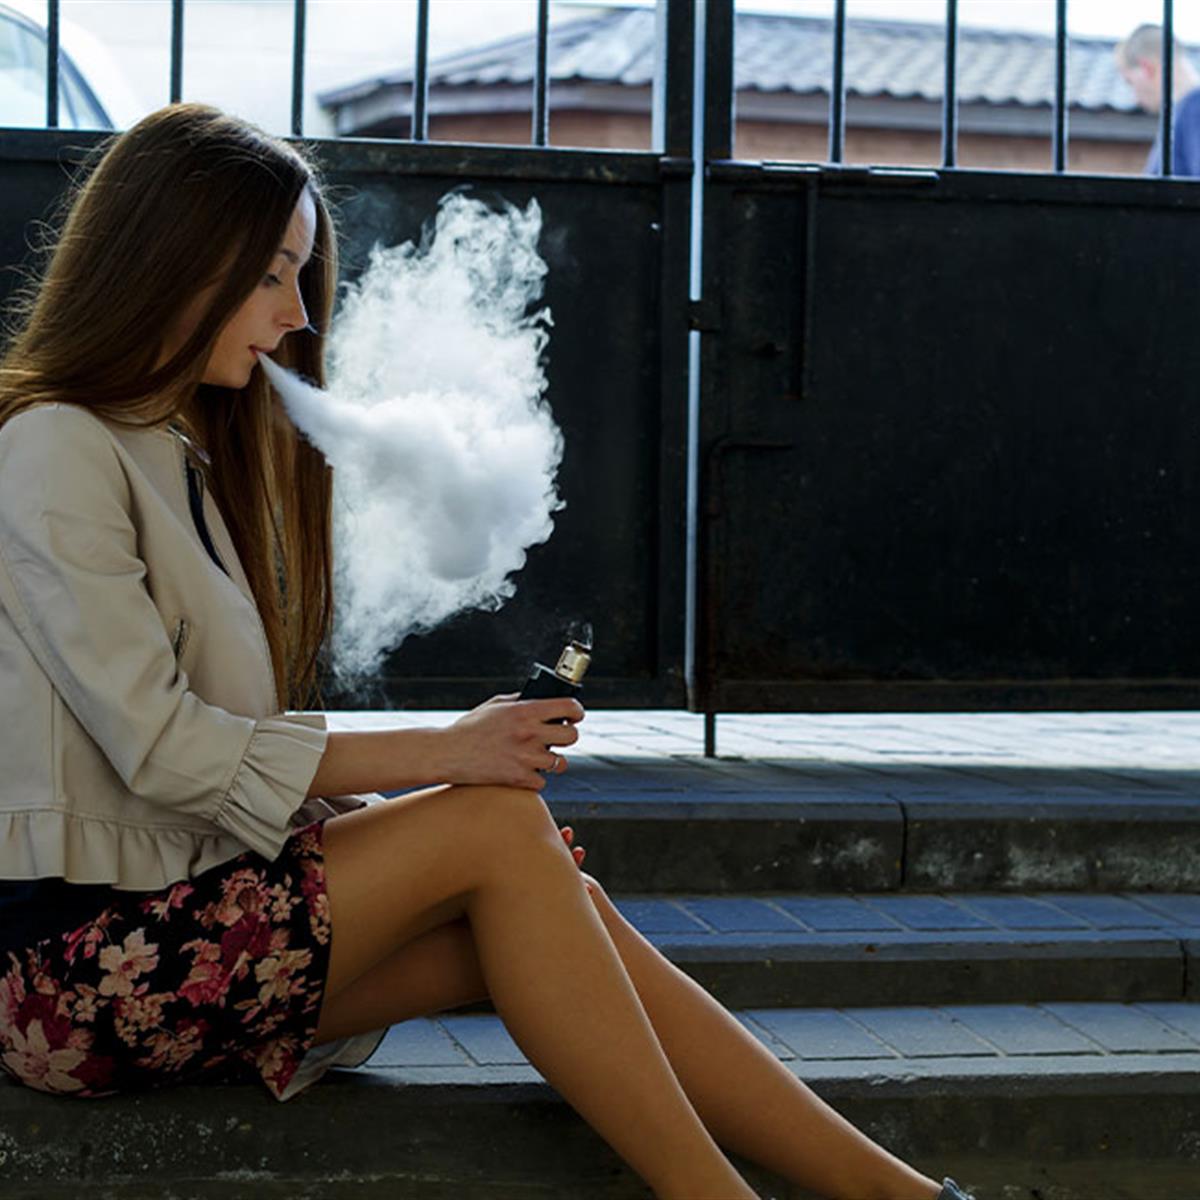 How Cigarette Advertisements Influence Teens - HealthyChildren.org